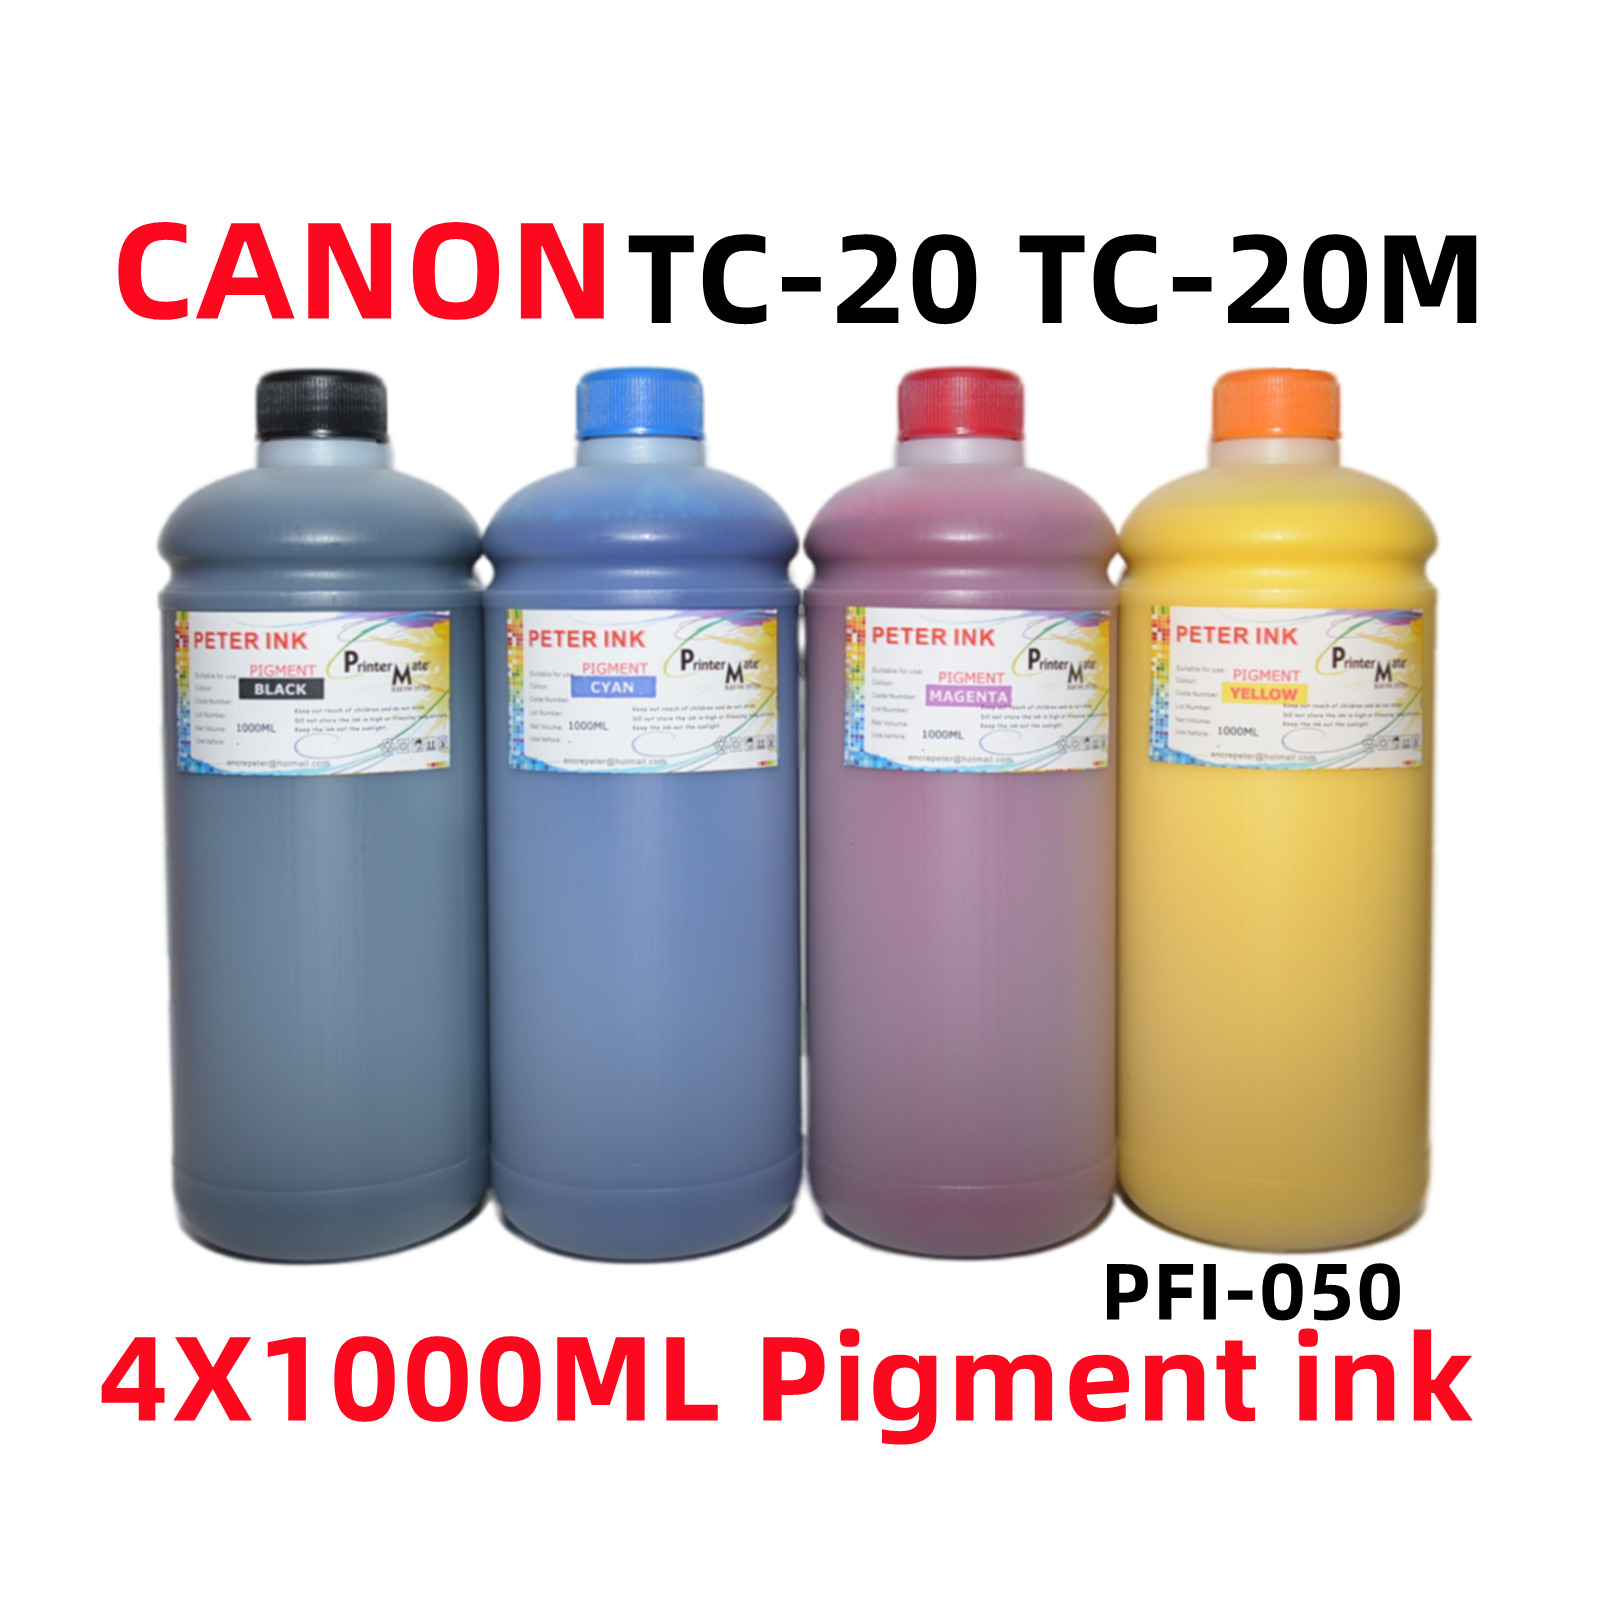 4X1000ML Pigment Ink refills CANON imagePROGRAF TC-20 TC-20M PFI-050